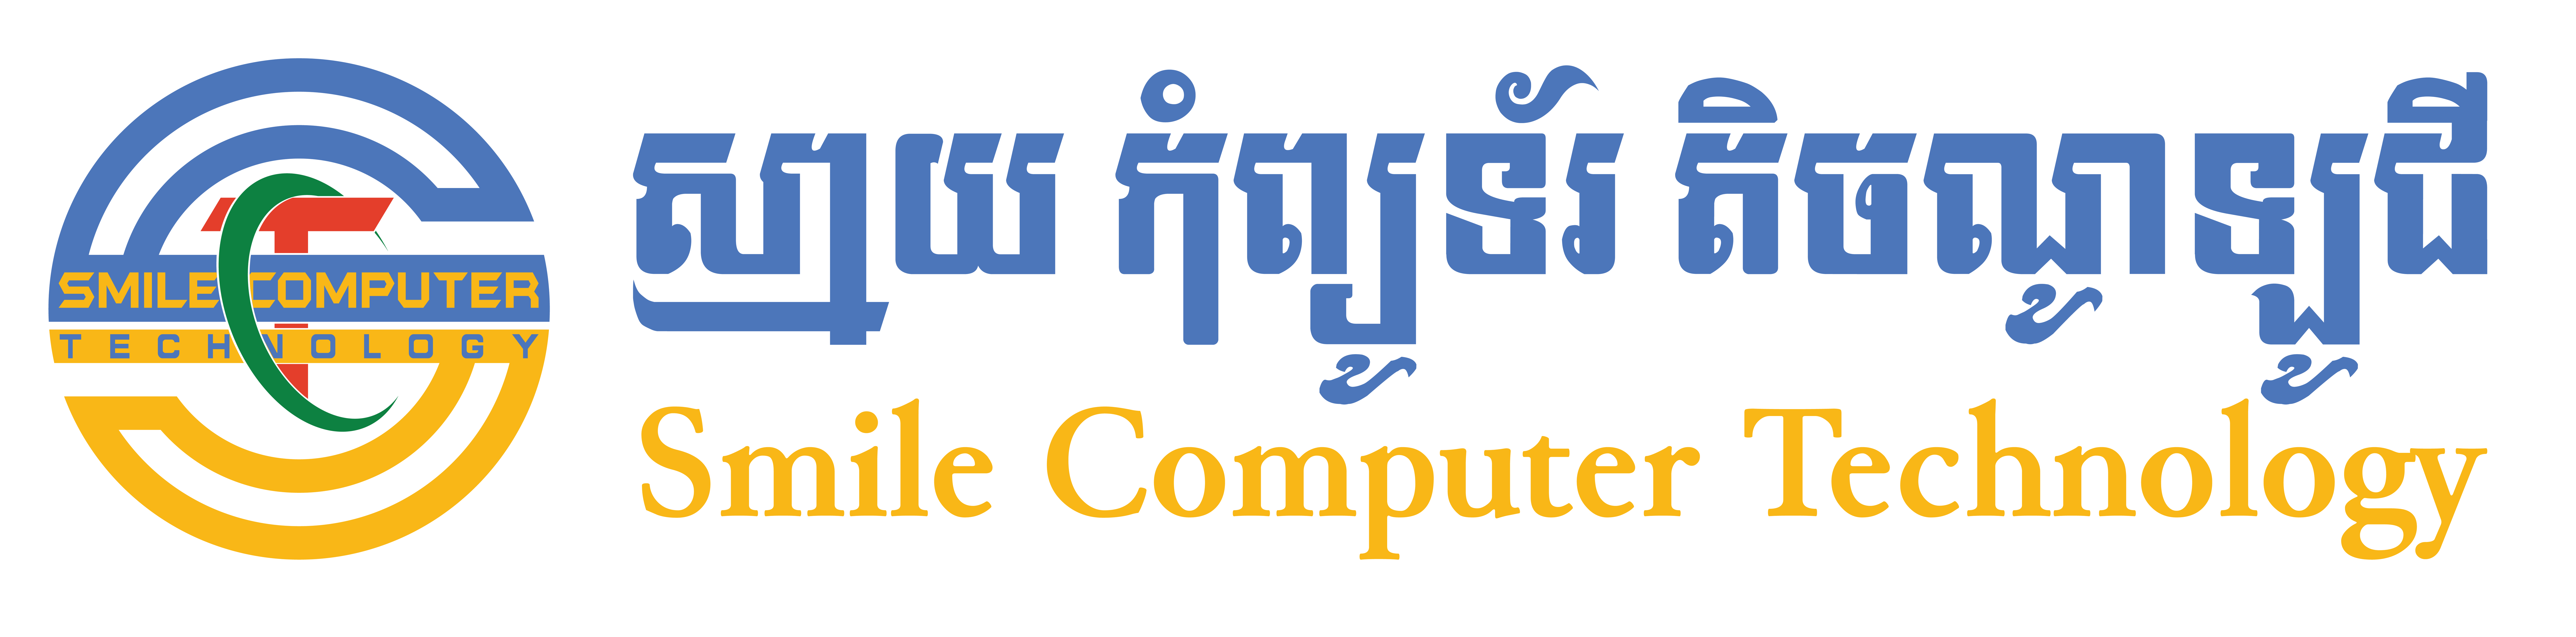 SCT Computer 